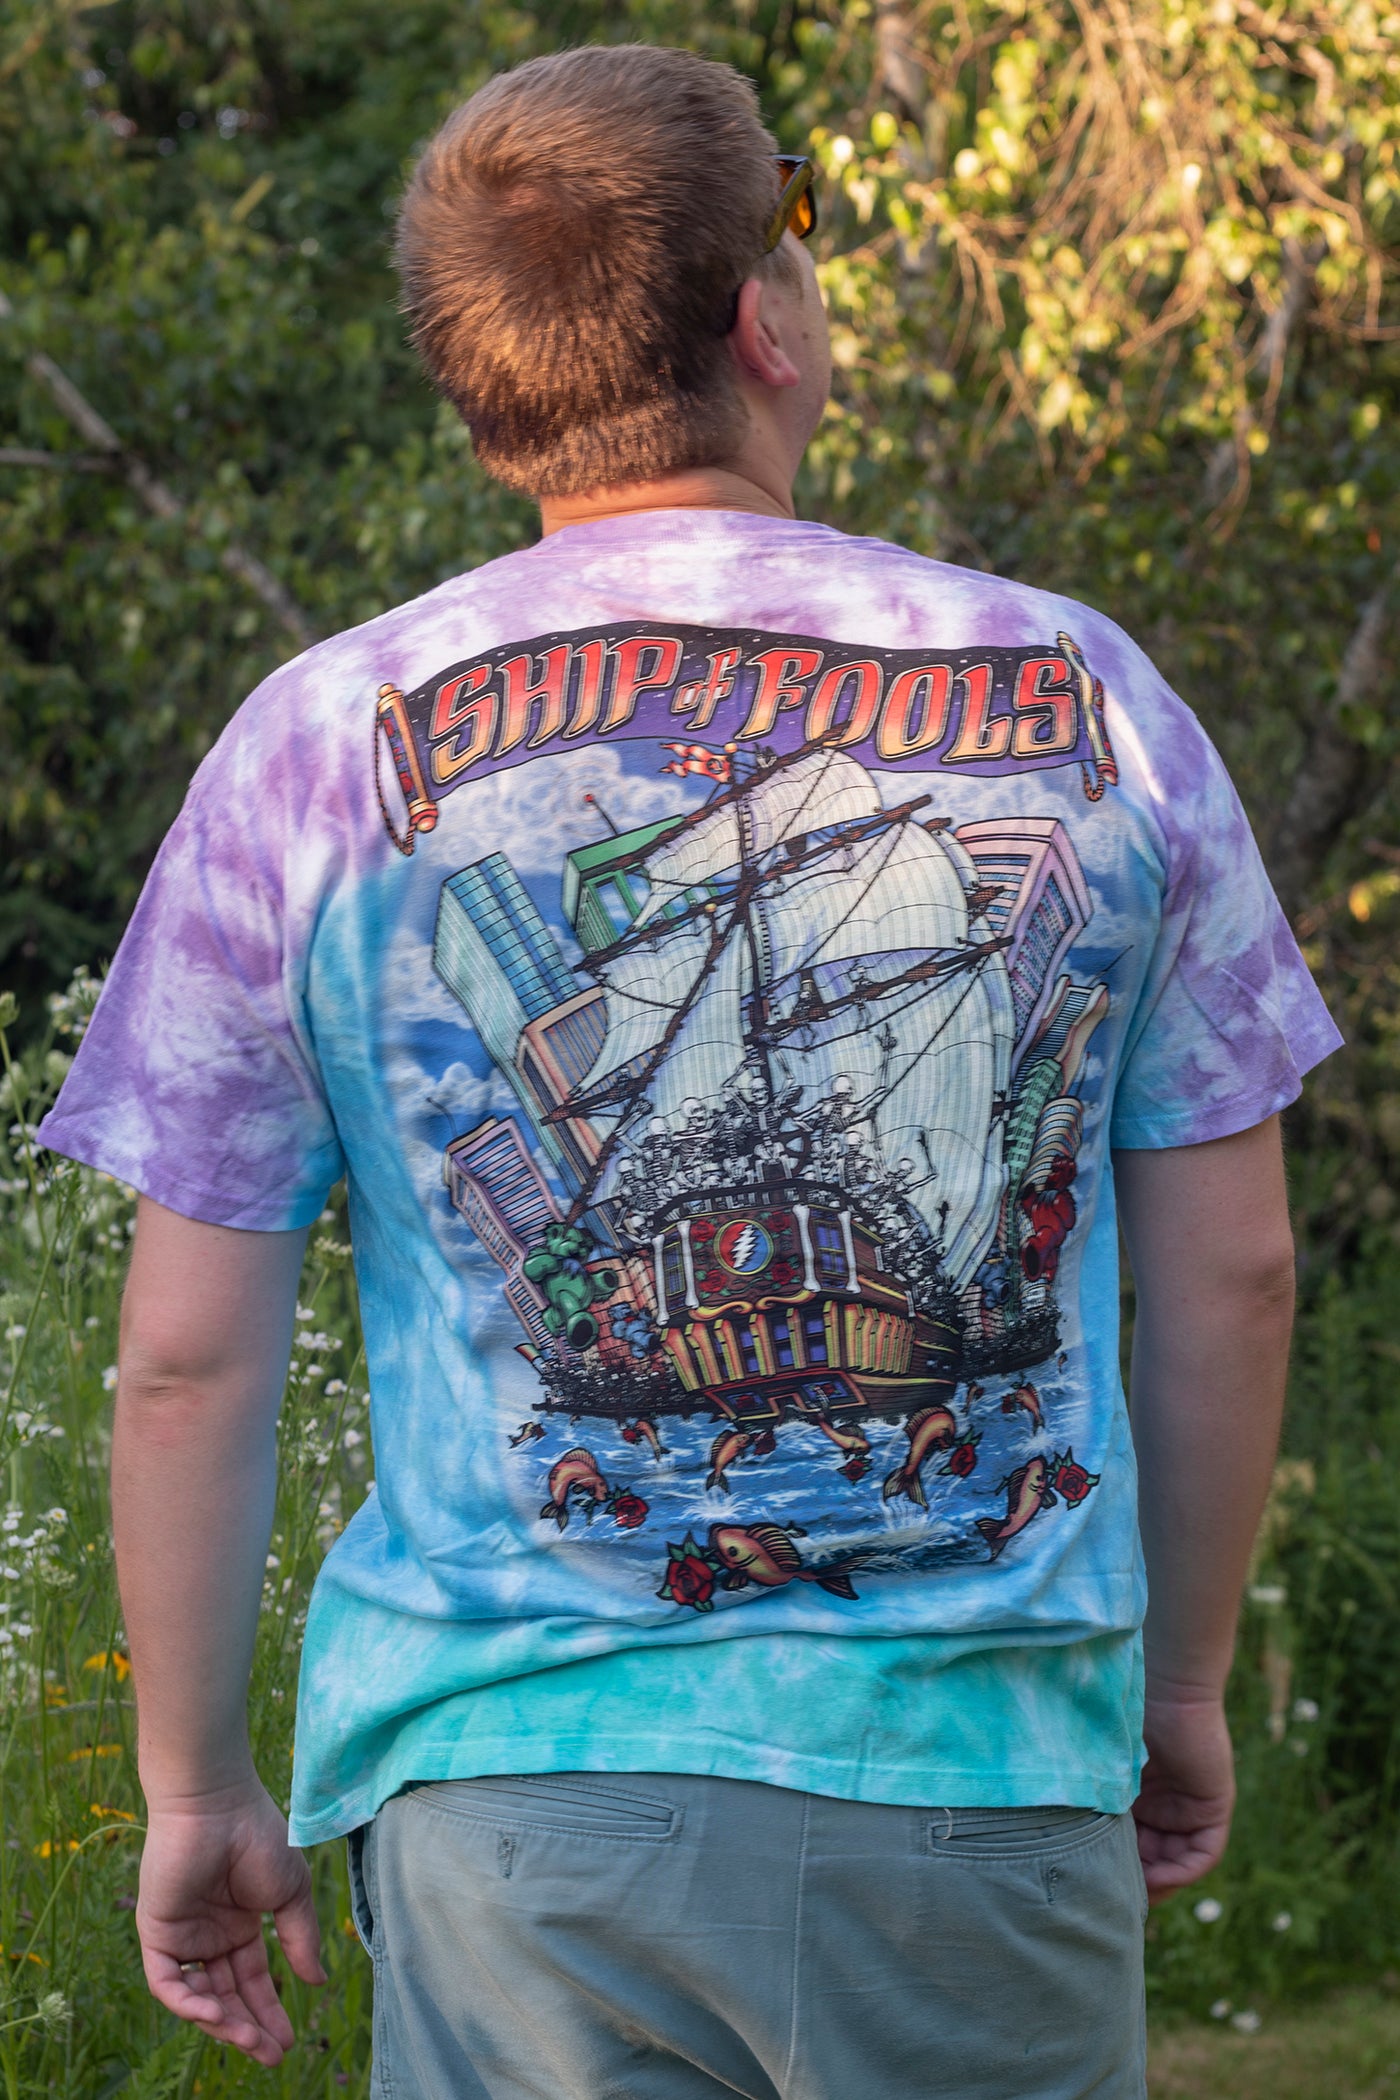 Ship of Fools Tie Dye Grateful Dead T-Shirt